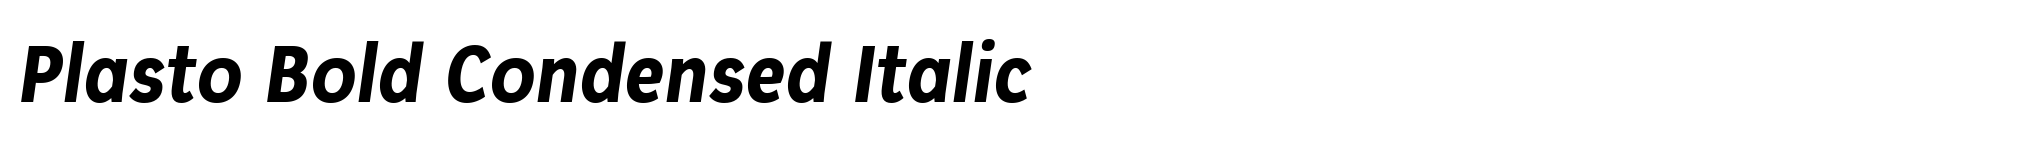 Plasto Bold Condensed Italic image